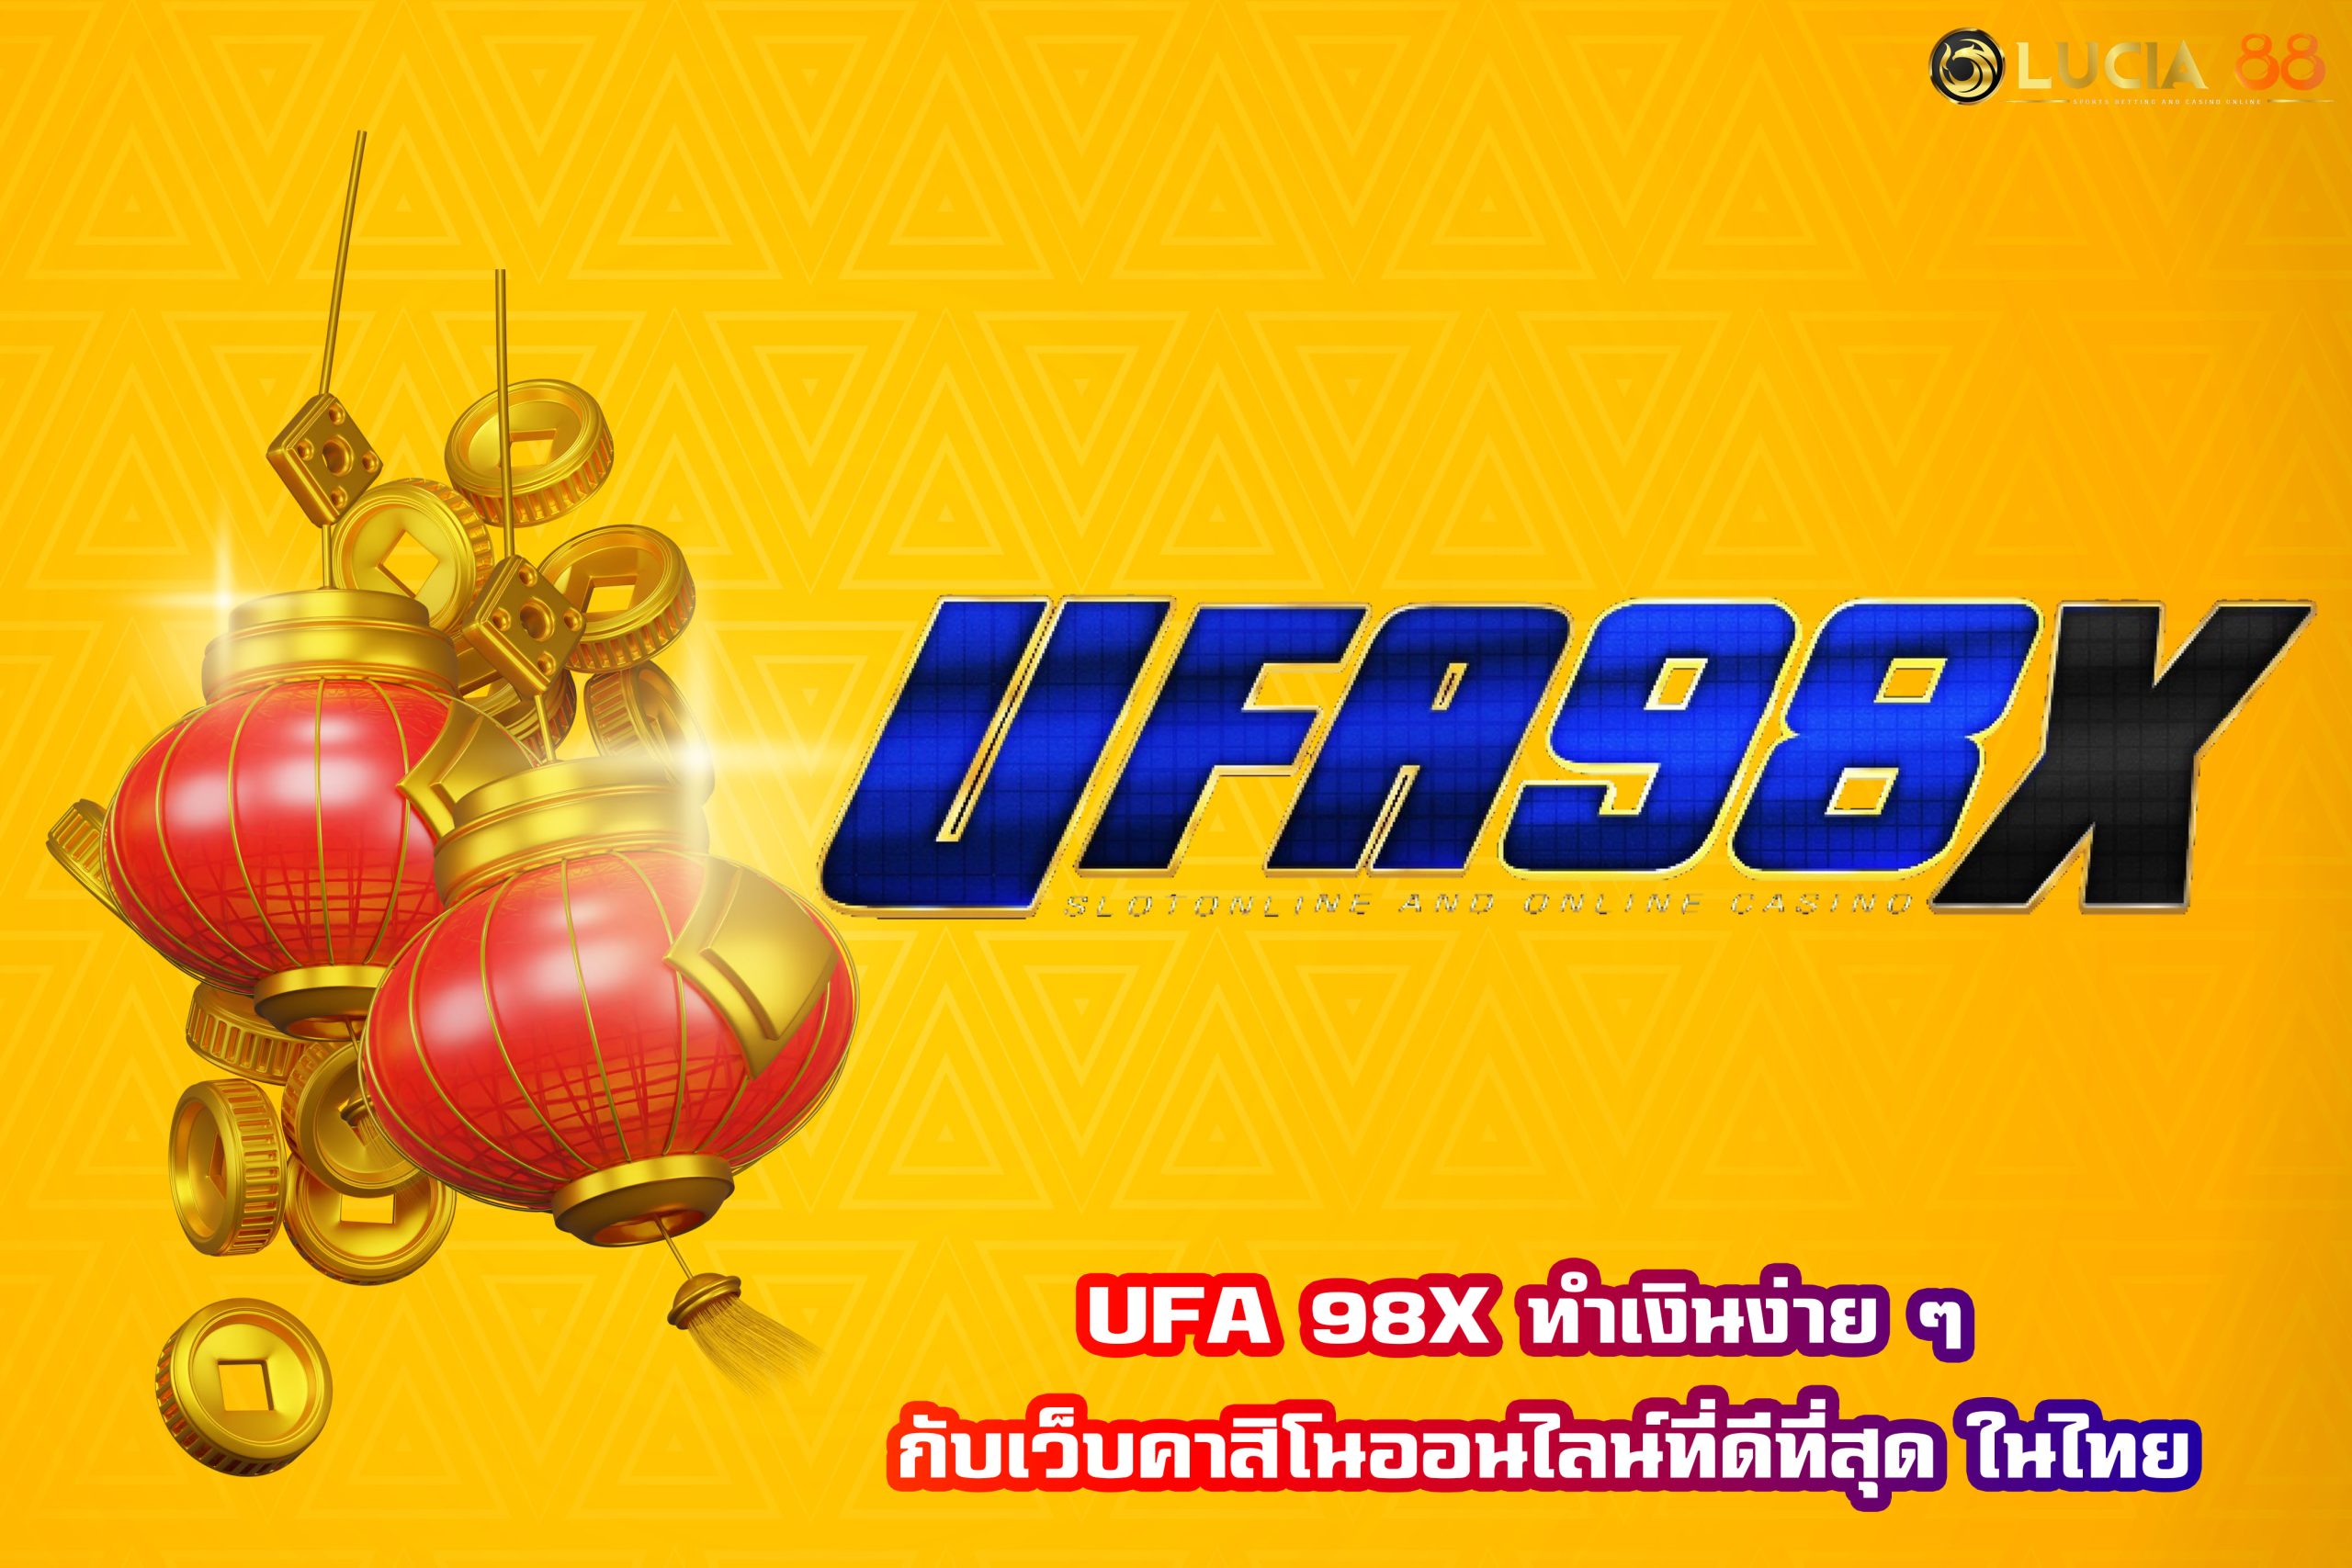 UFA 98X ทำเงินง่าย ๆ กับเว็บคาสิโนออนไลน์ที่ดีที่สุด ในไทย